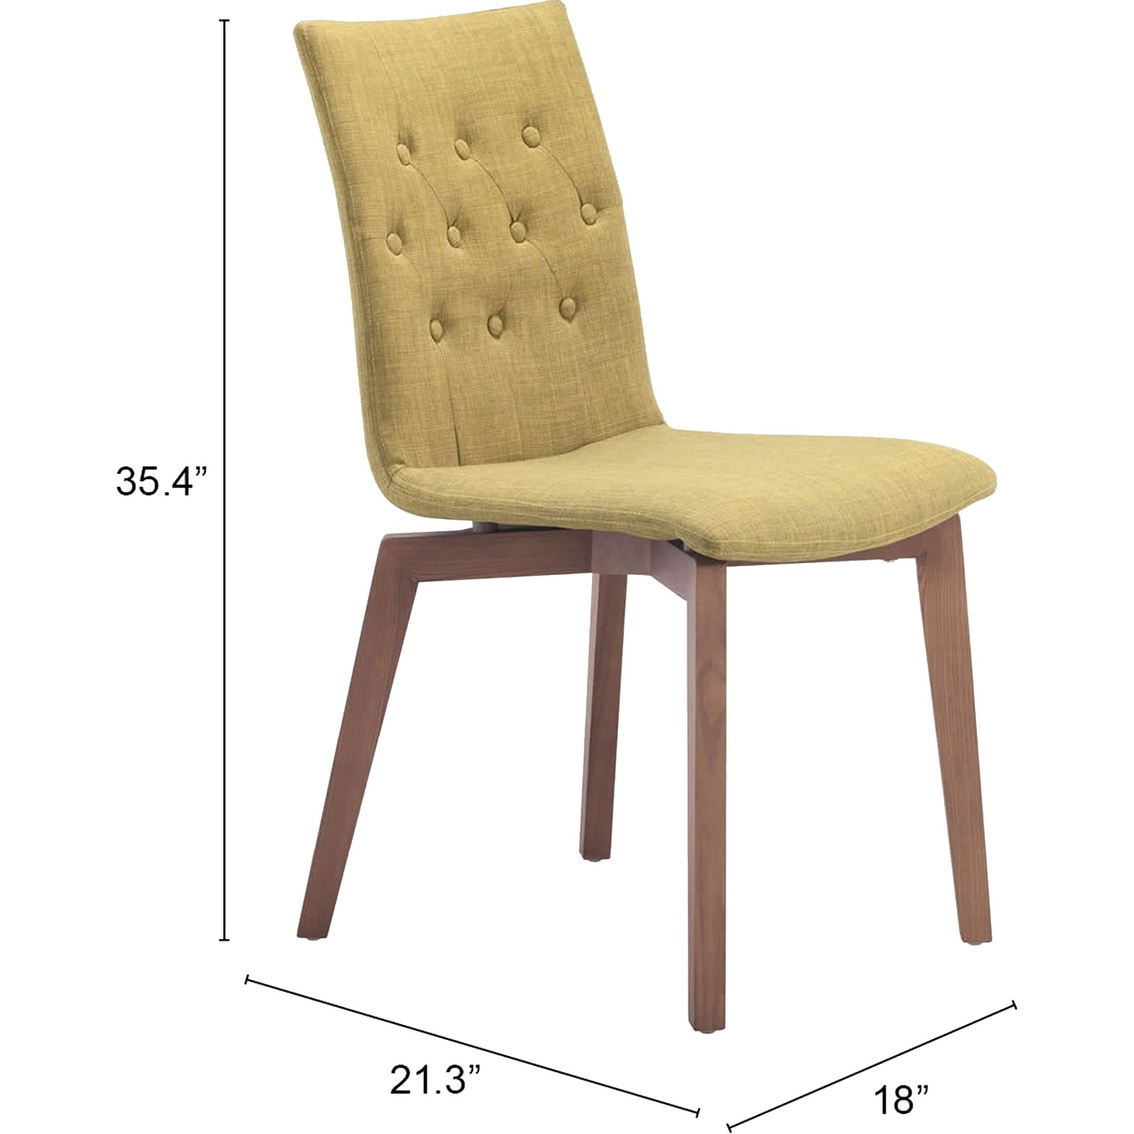 Zuo Orebro Dining Chair 2 Pk. - Image 6 of 8